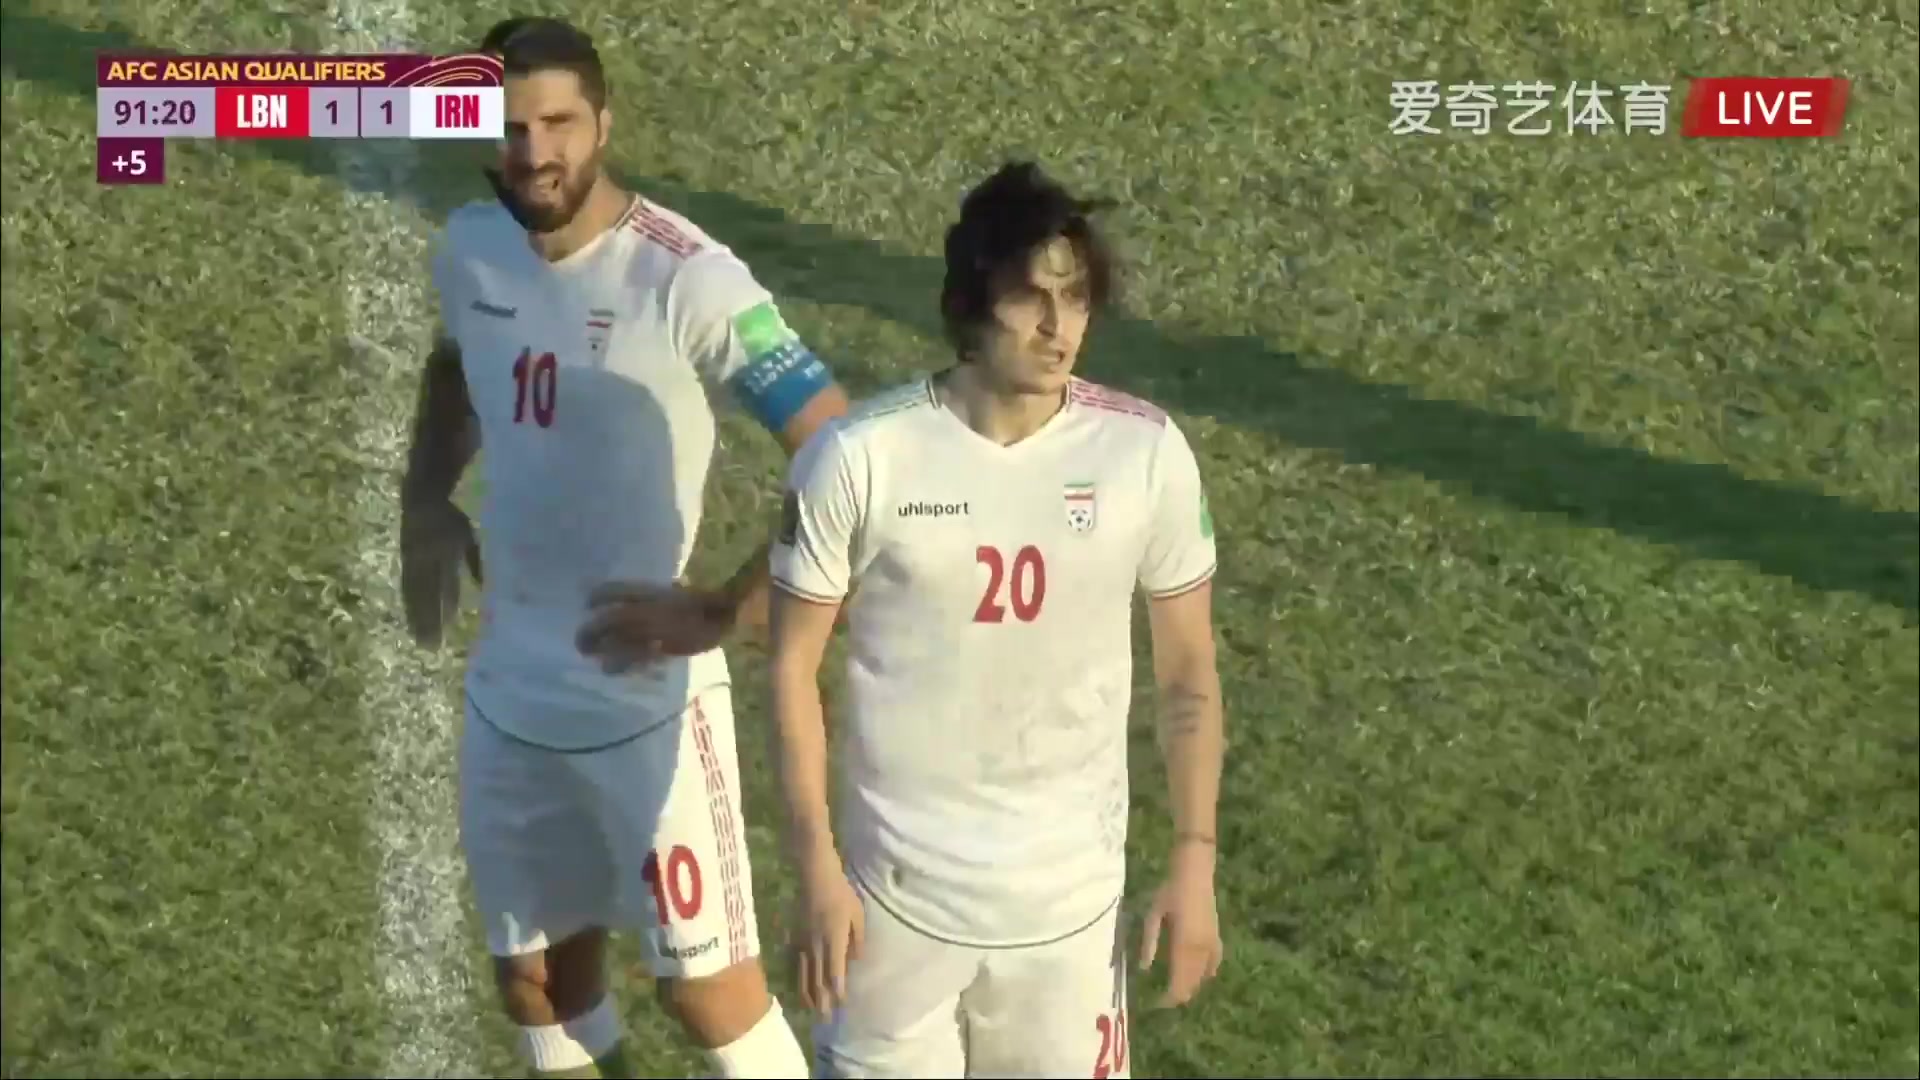 FIFA WCQL Lebanon Vs Iran Ahmad Nourollahi Goal in 91 min, Score 1:1